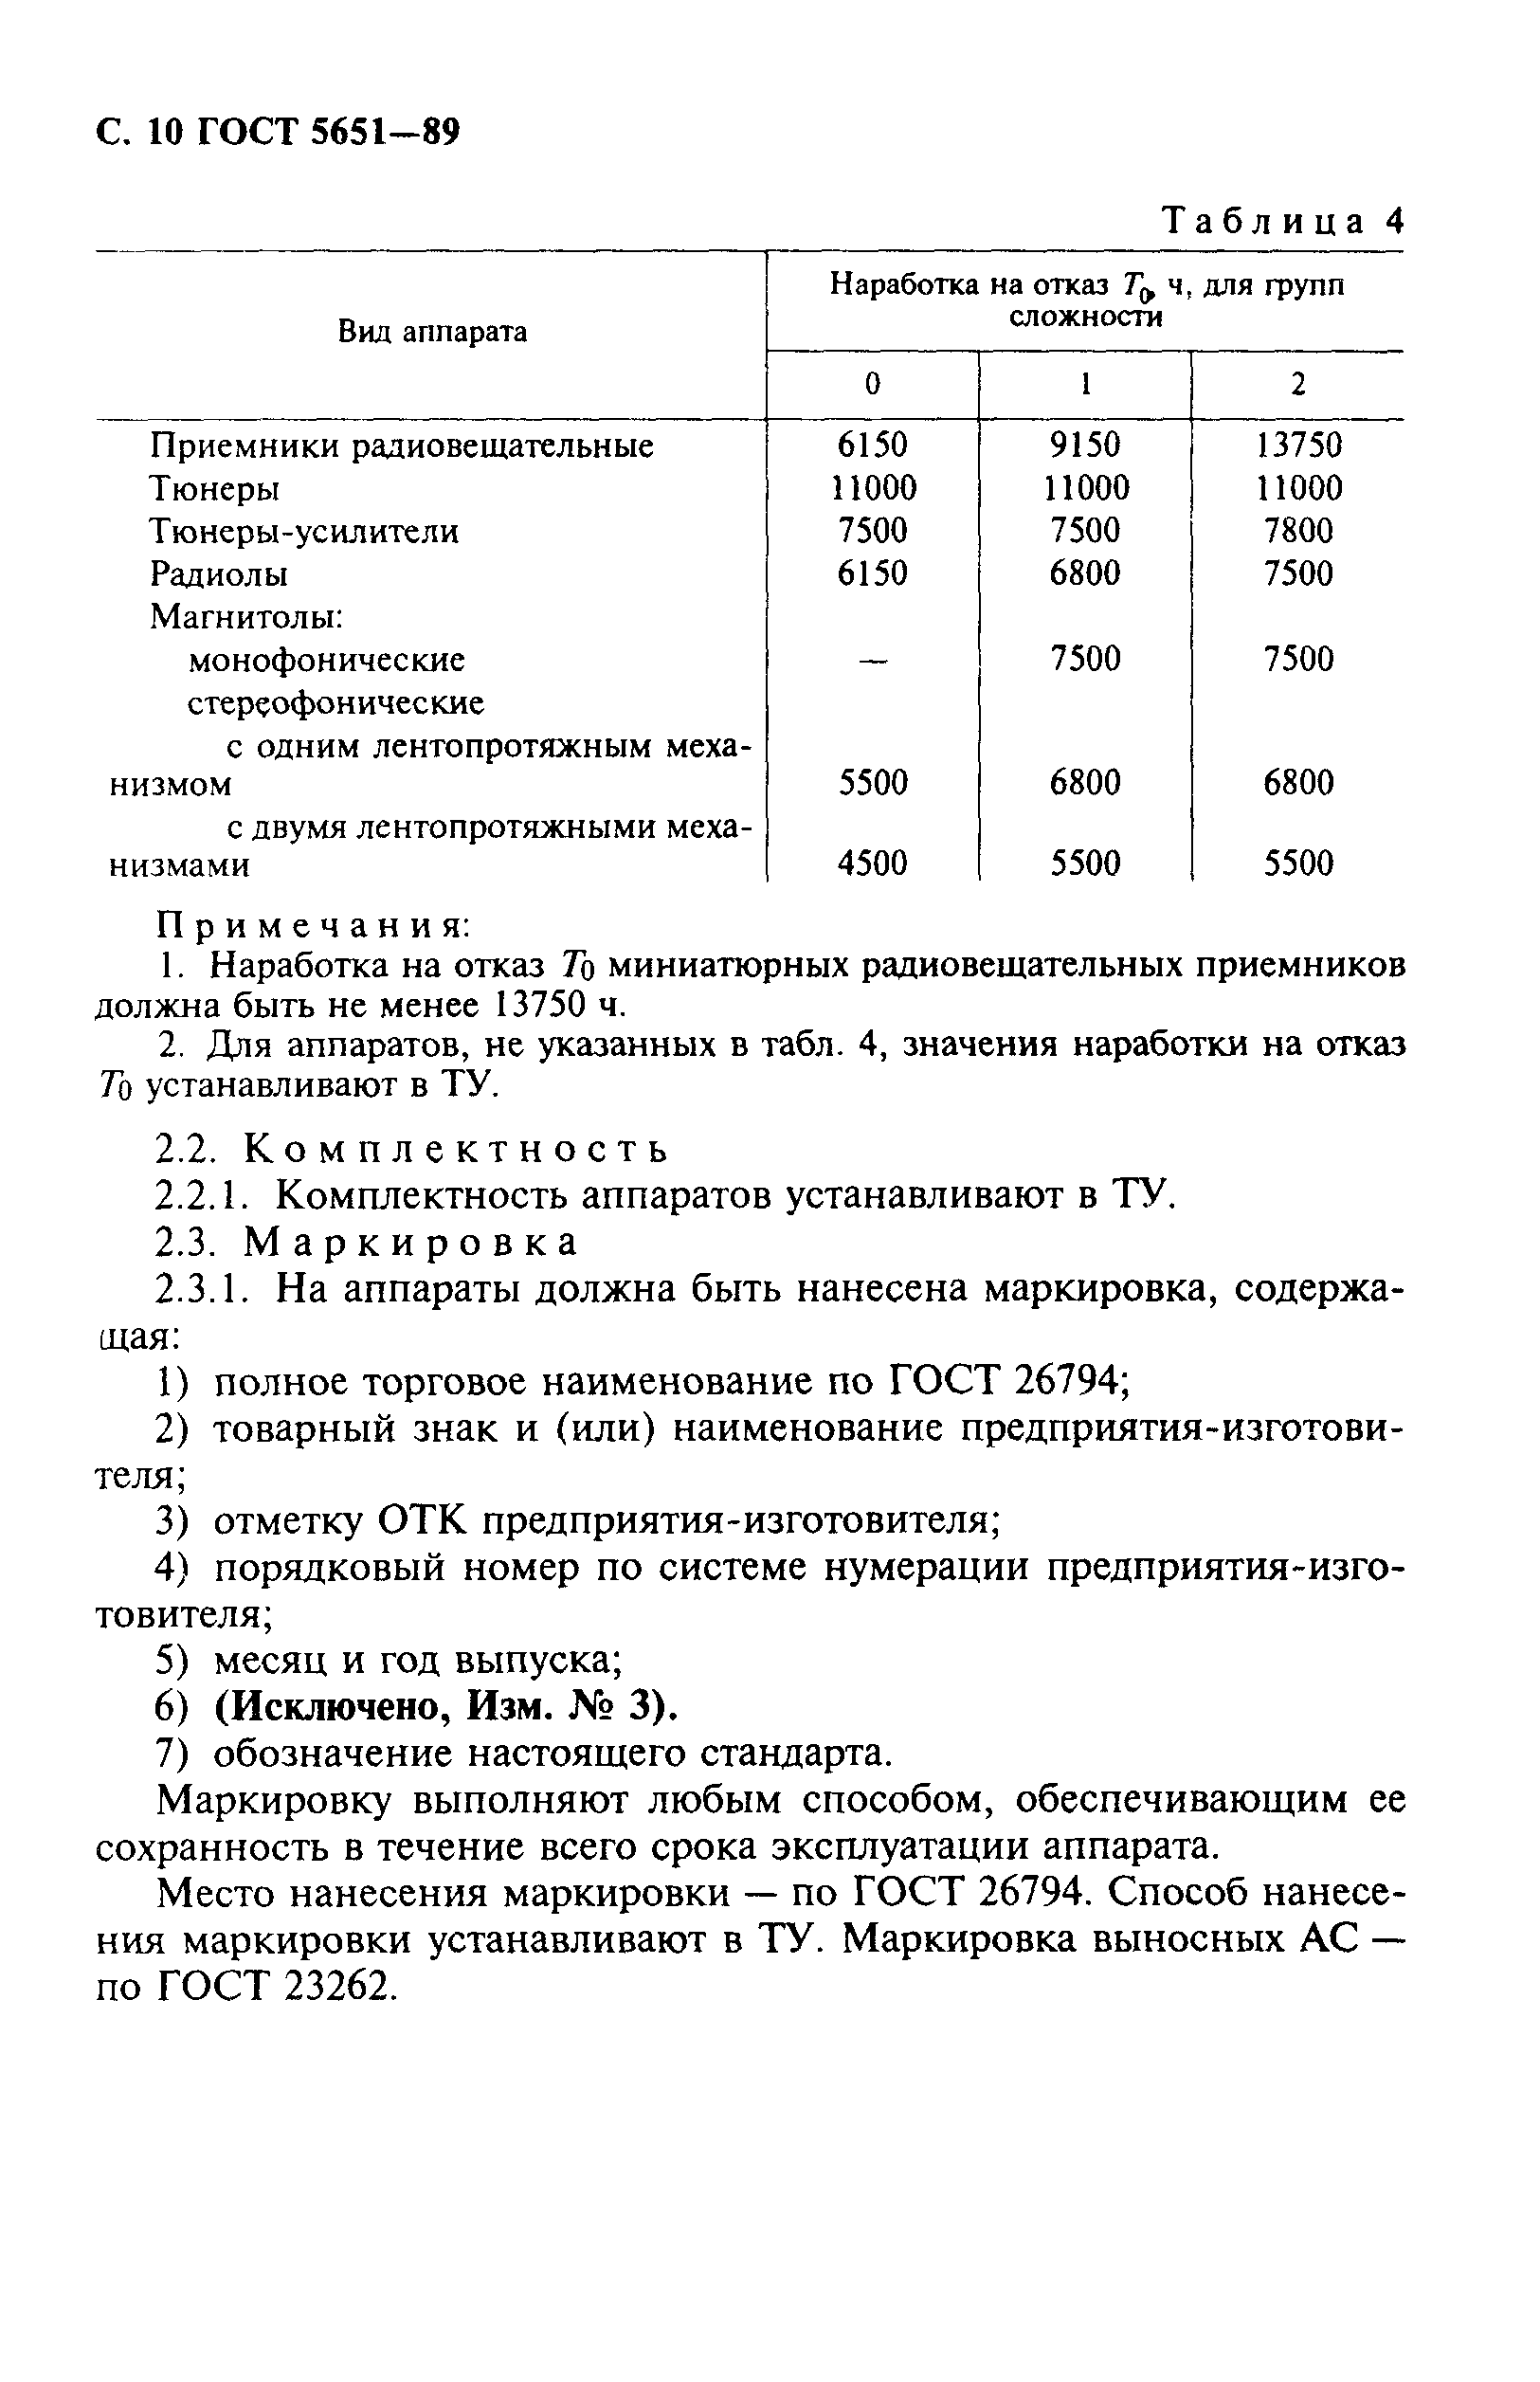 ГОСТ 5651-89